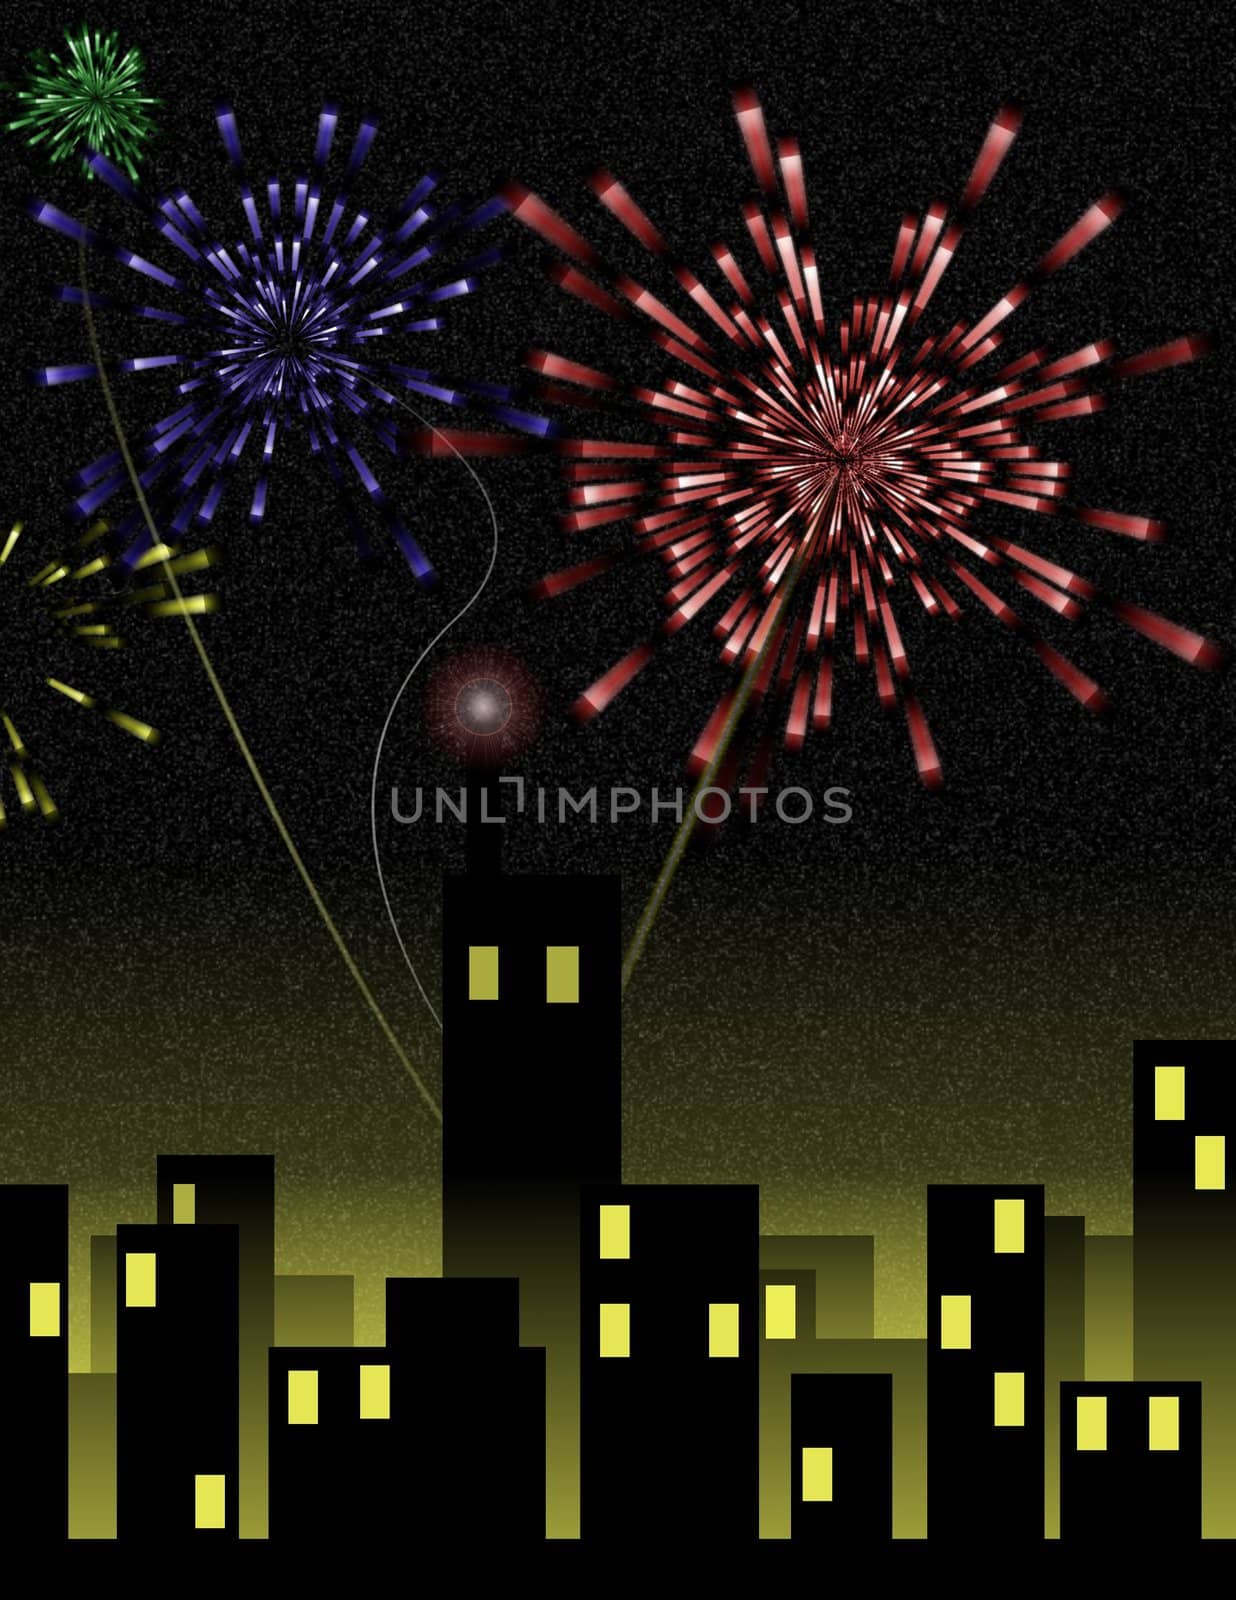 Holiday fireworks burst over a night cityscape – a raster illustration.